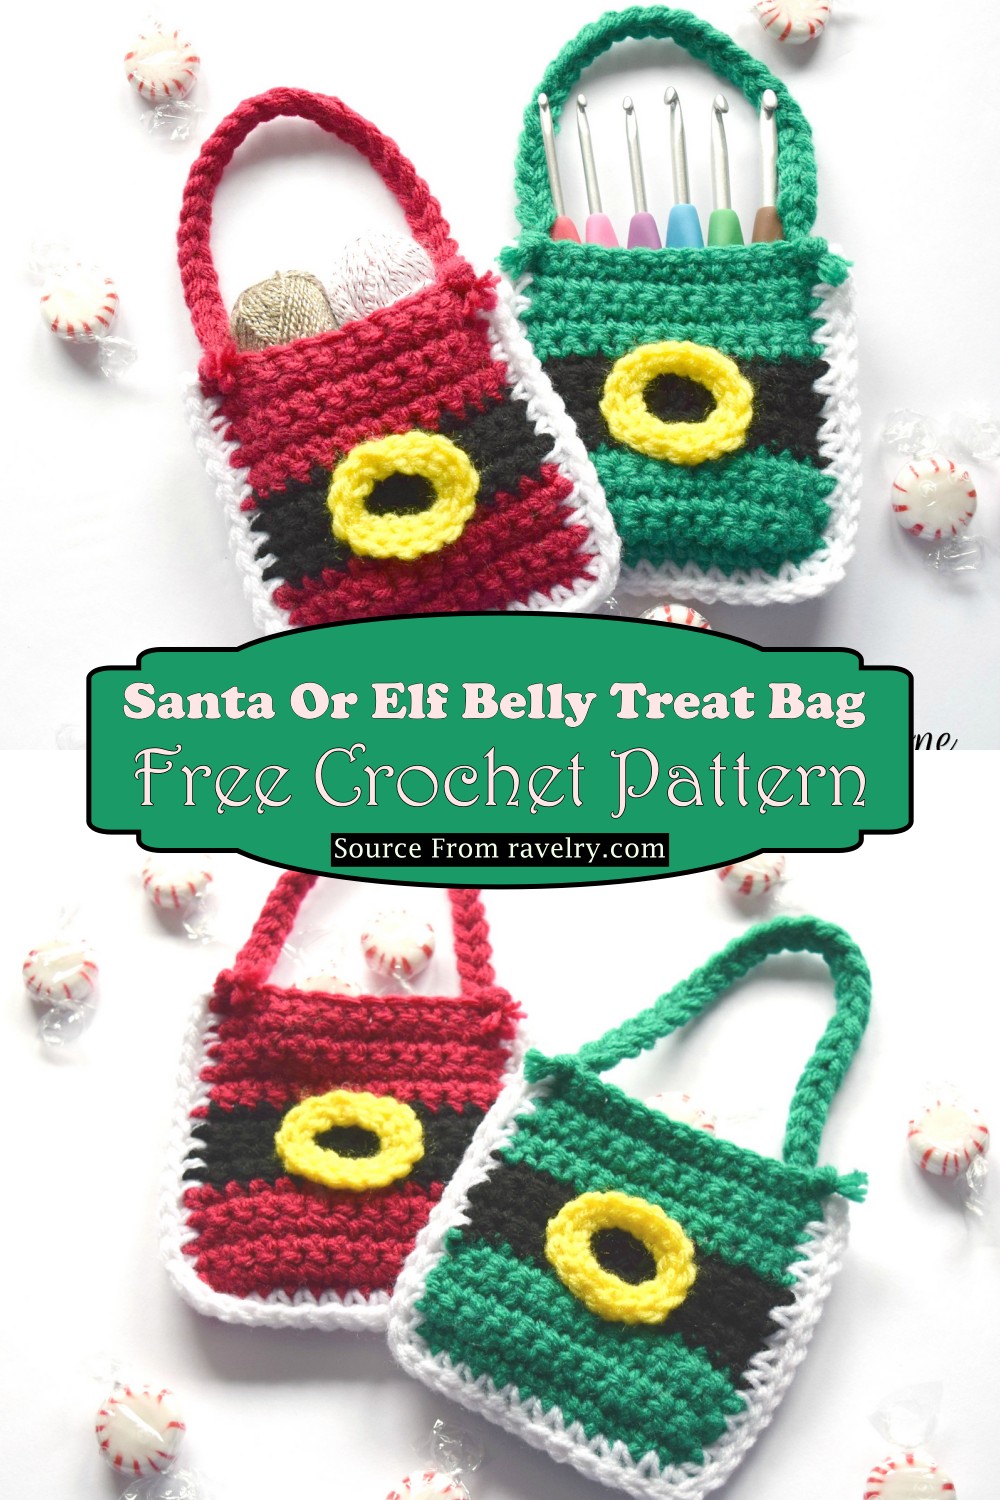 Santa Or Elf Belly Treat Bag